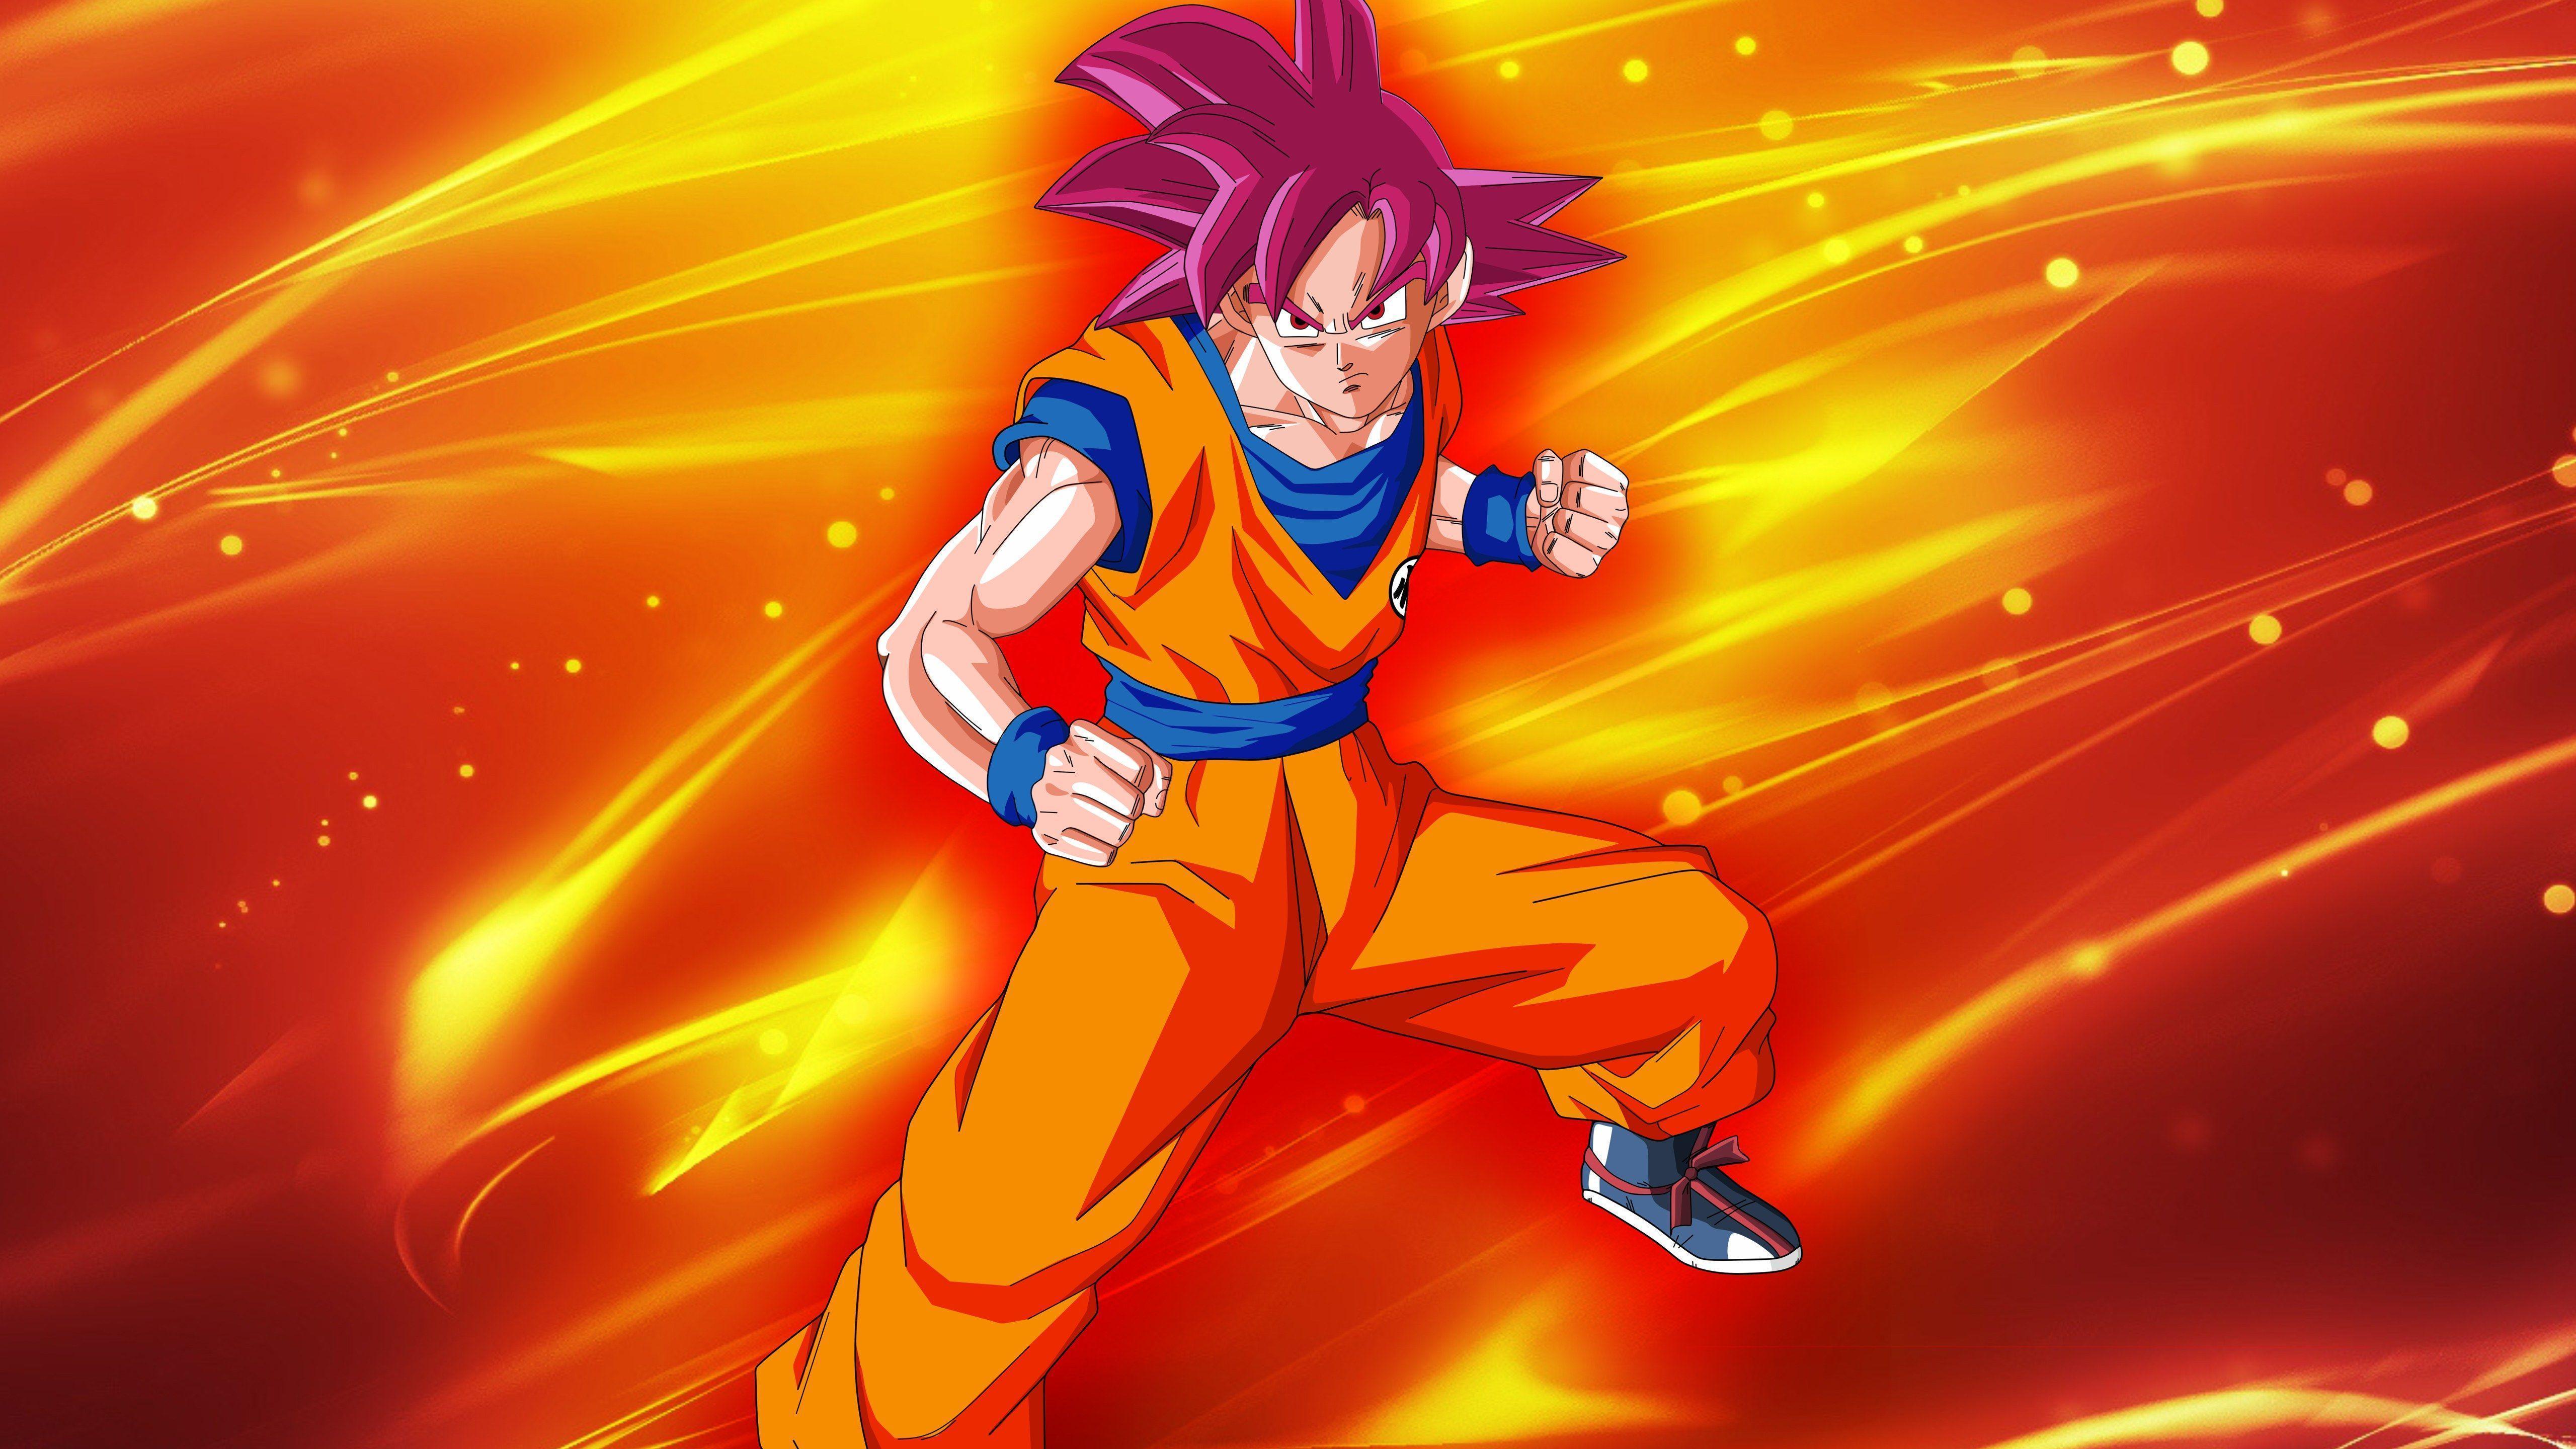 Free download Goku SSJ God Wallpapers Top Goku SSJ God Backgrounds.